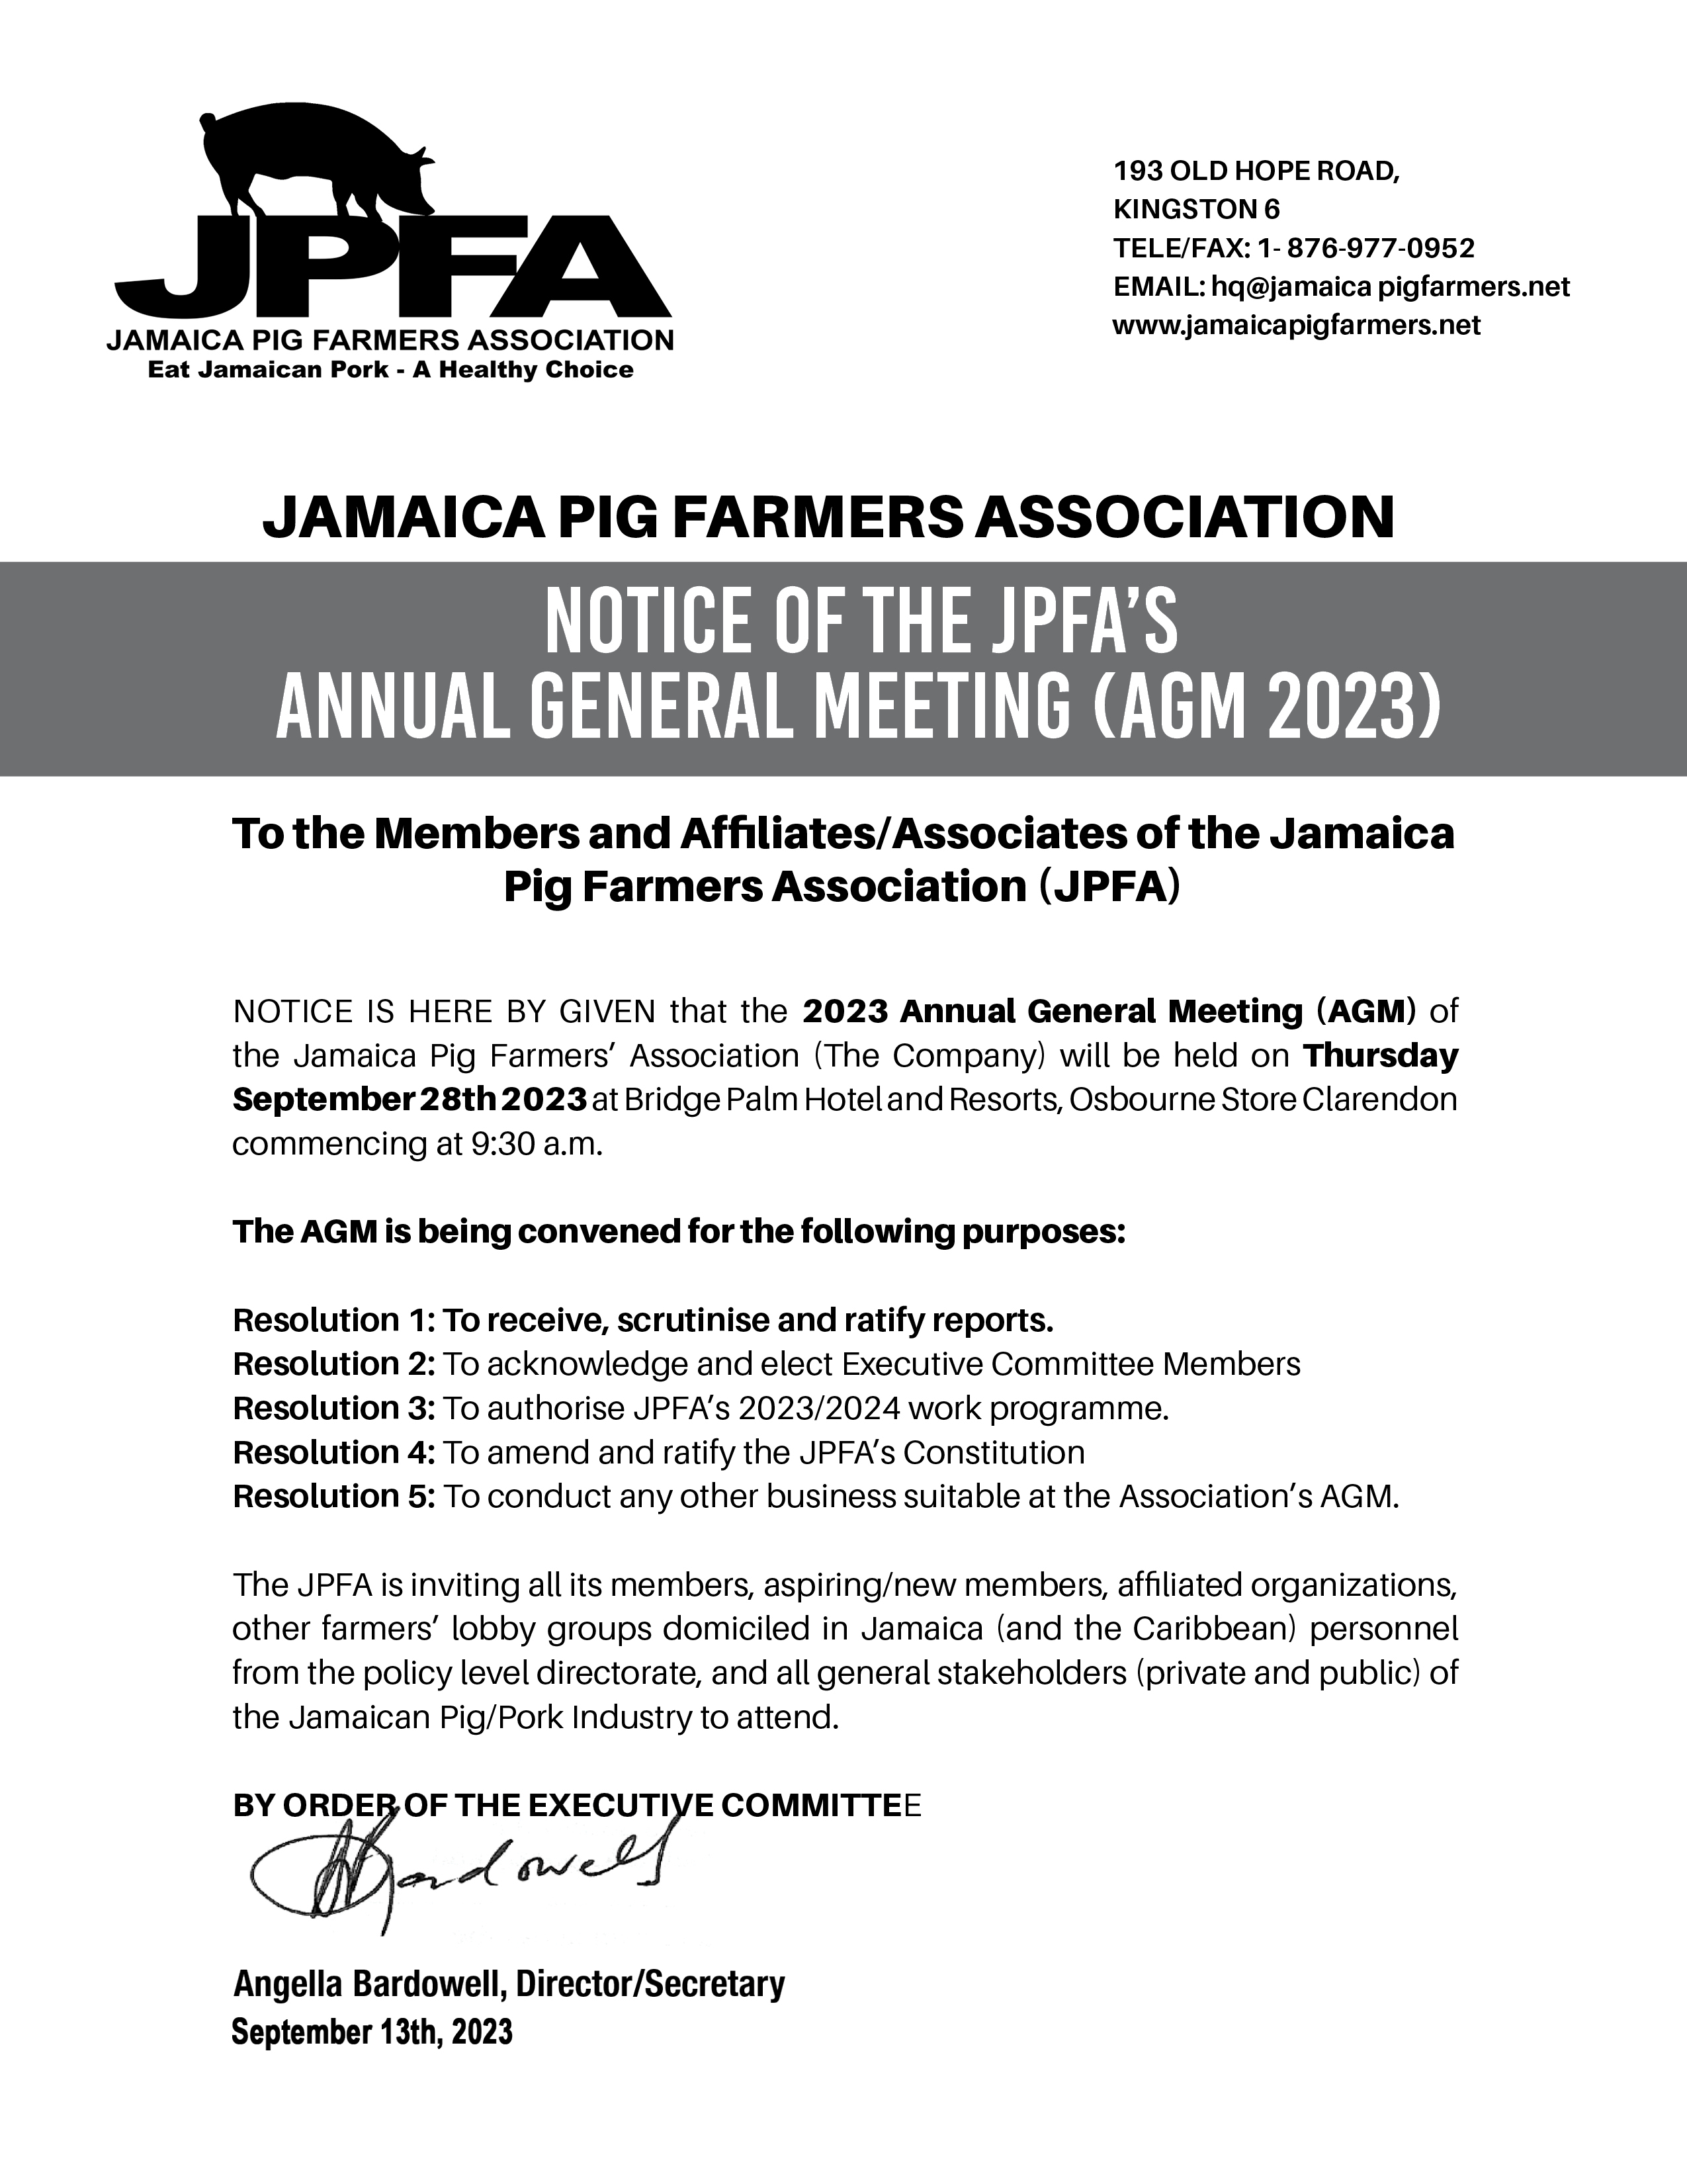 Notice of JPFA Annual General Meeting (AGM 2023)